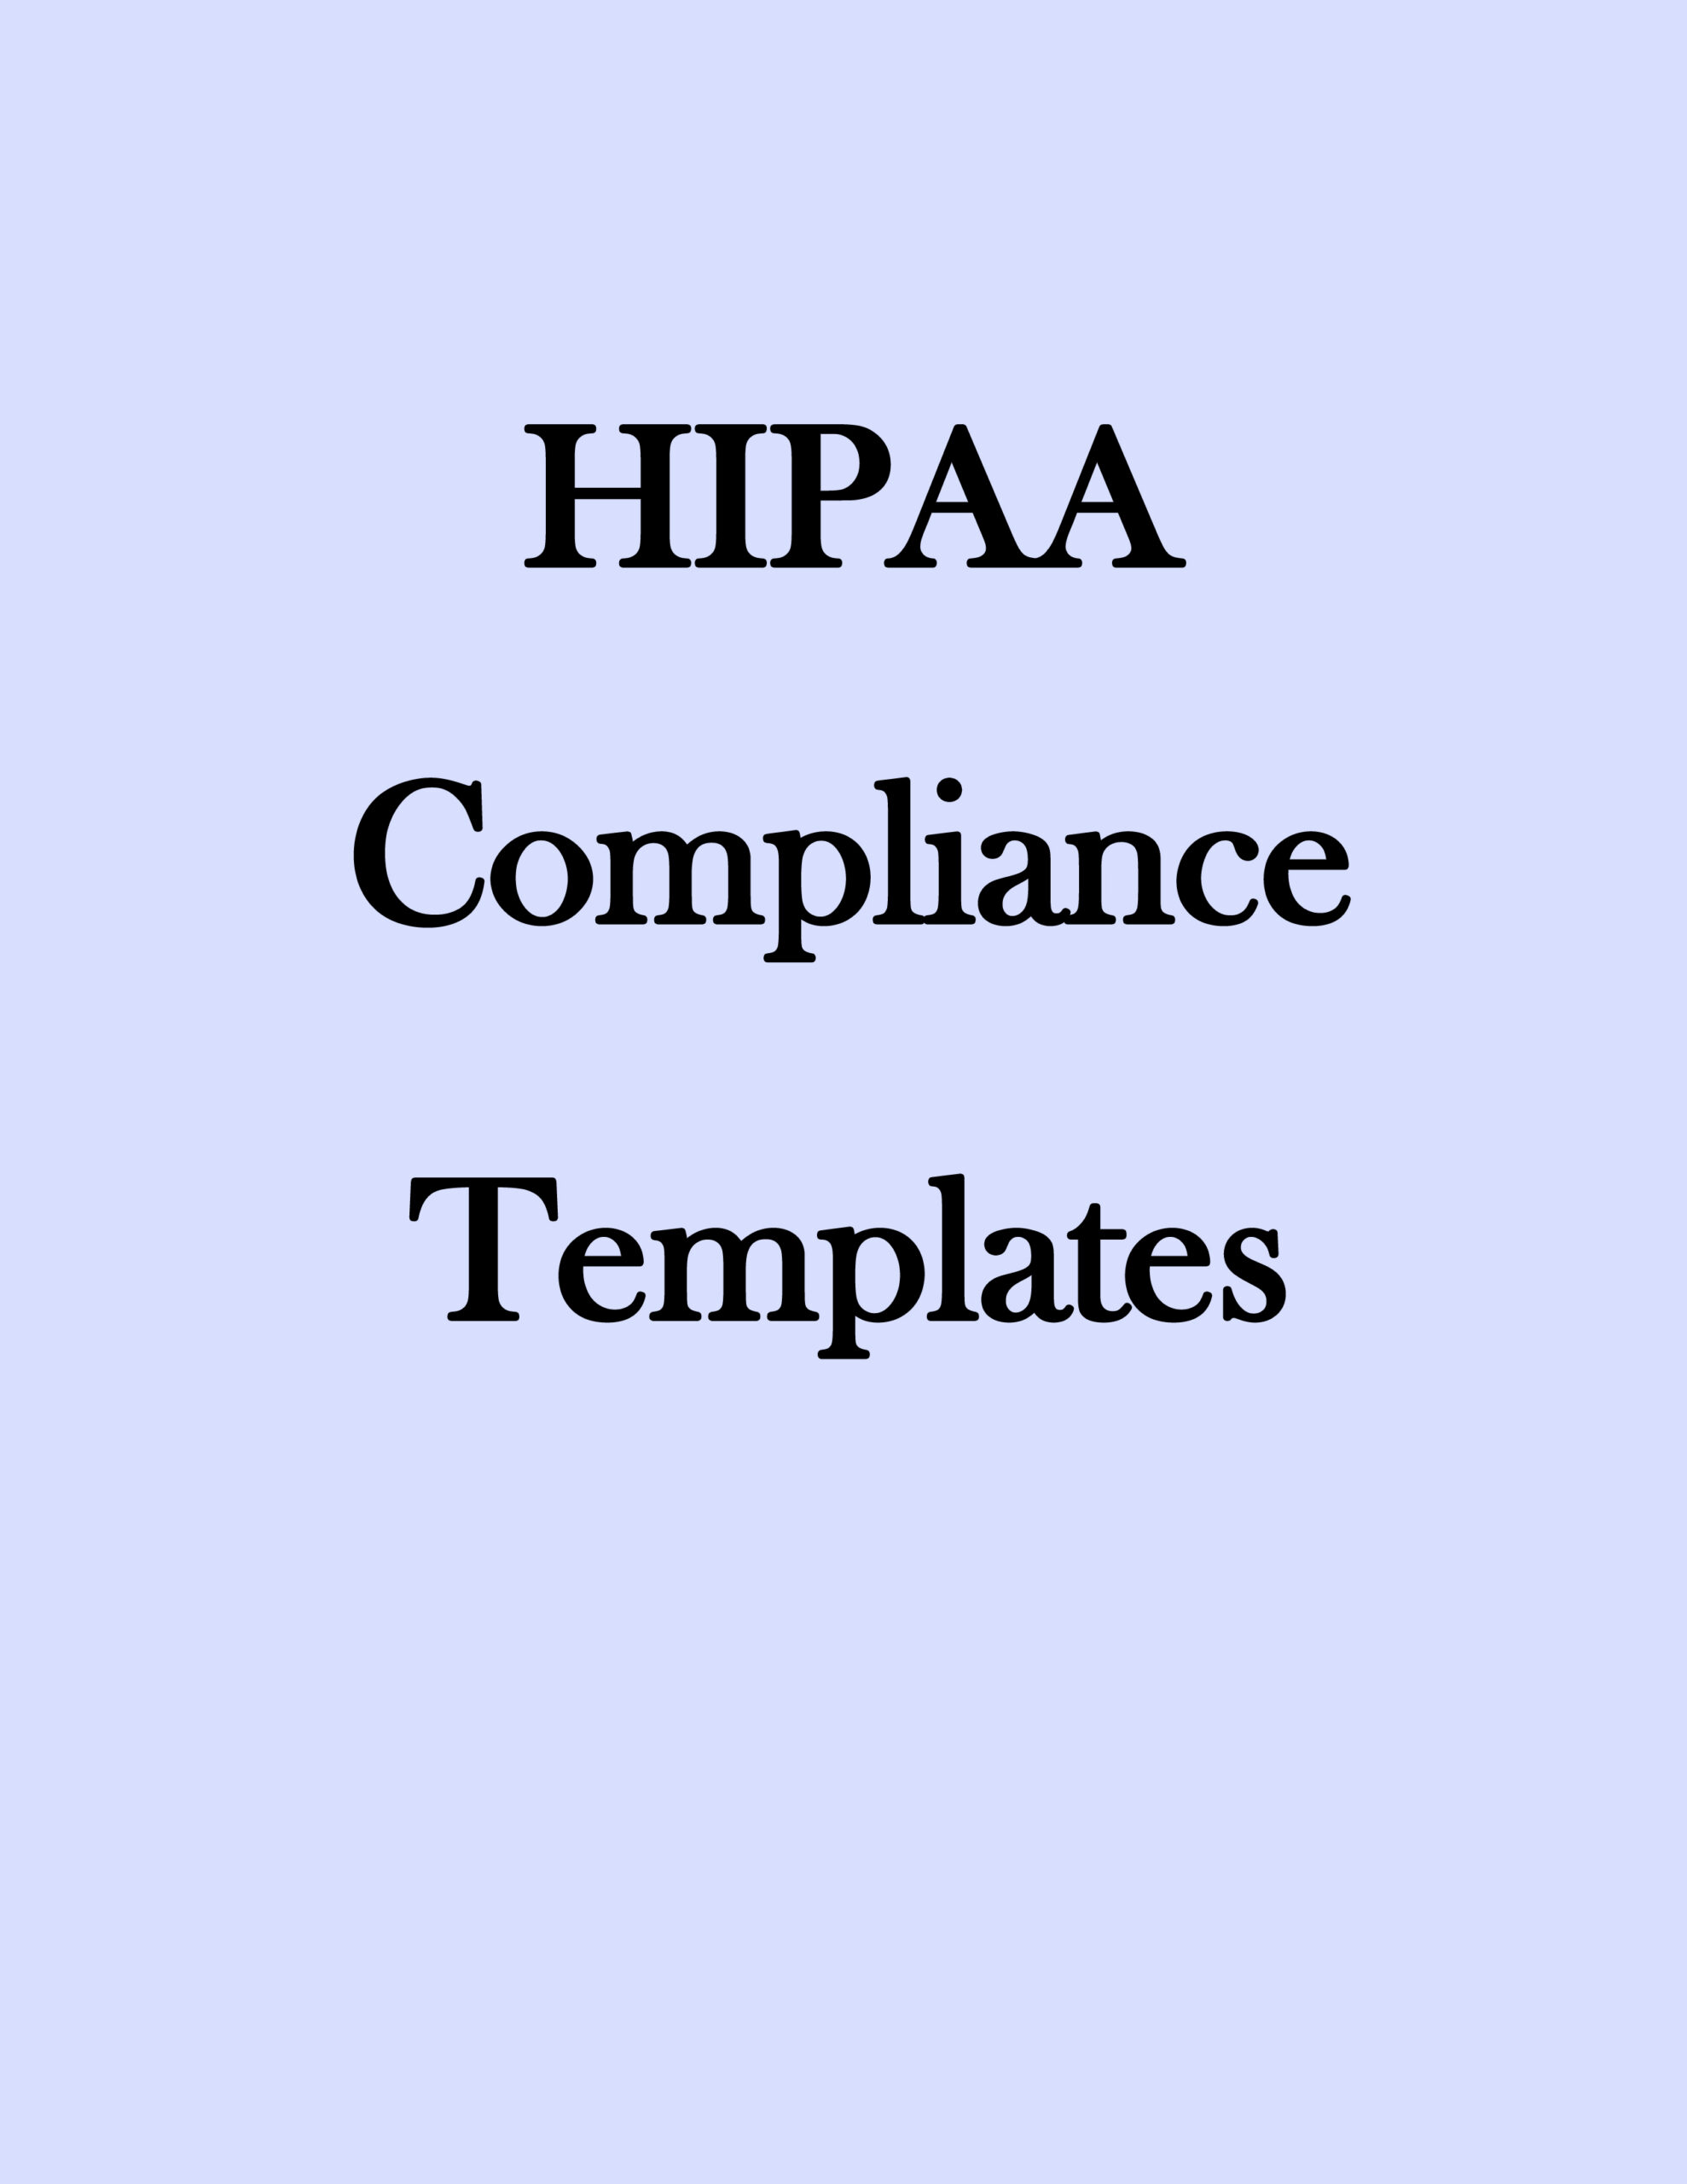 HIPAA Compliance Templates